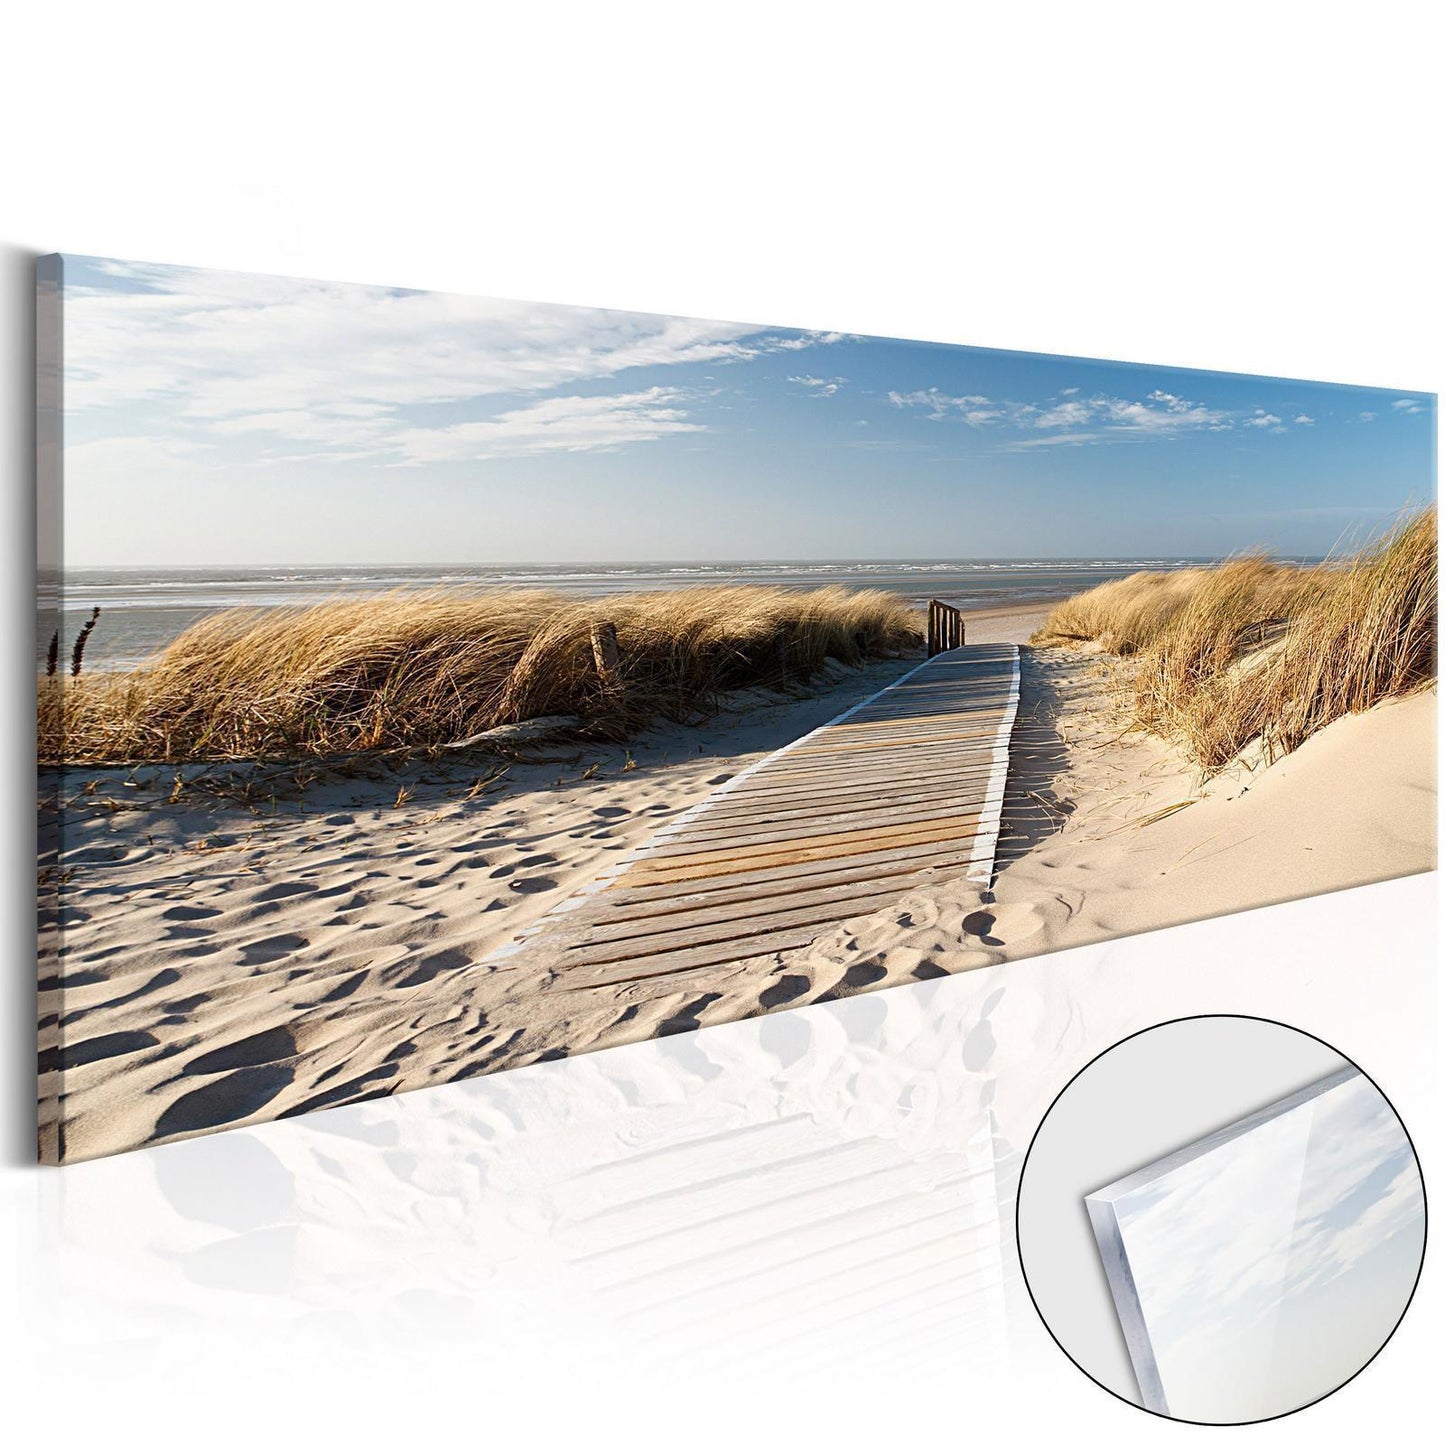 Image on acrylic glass - Wild Beach [Glass]